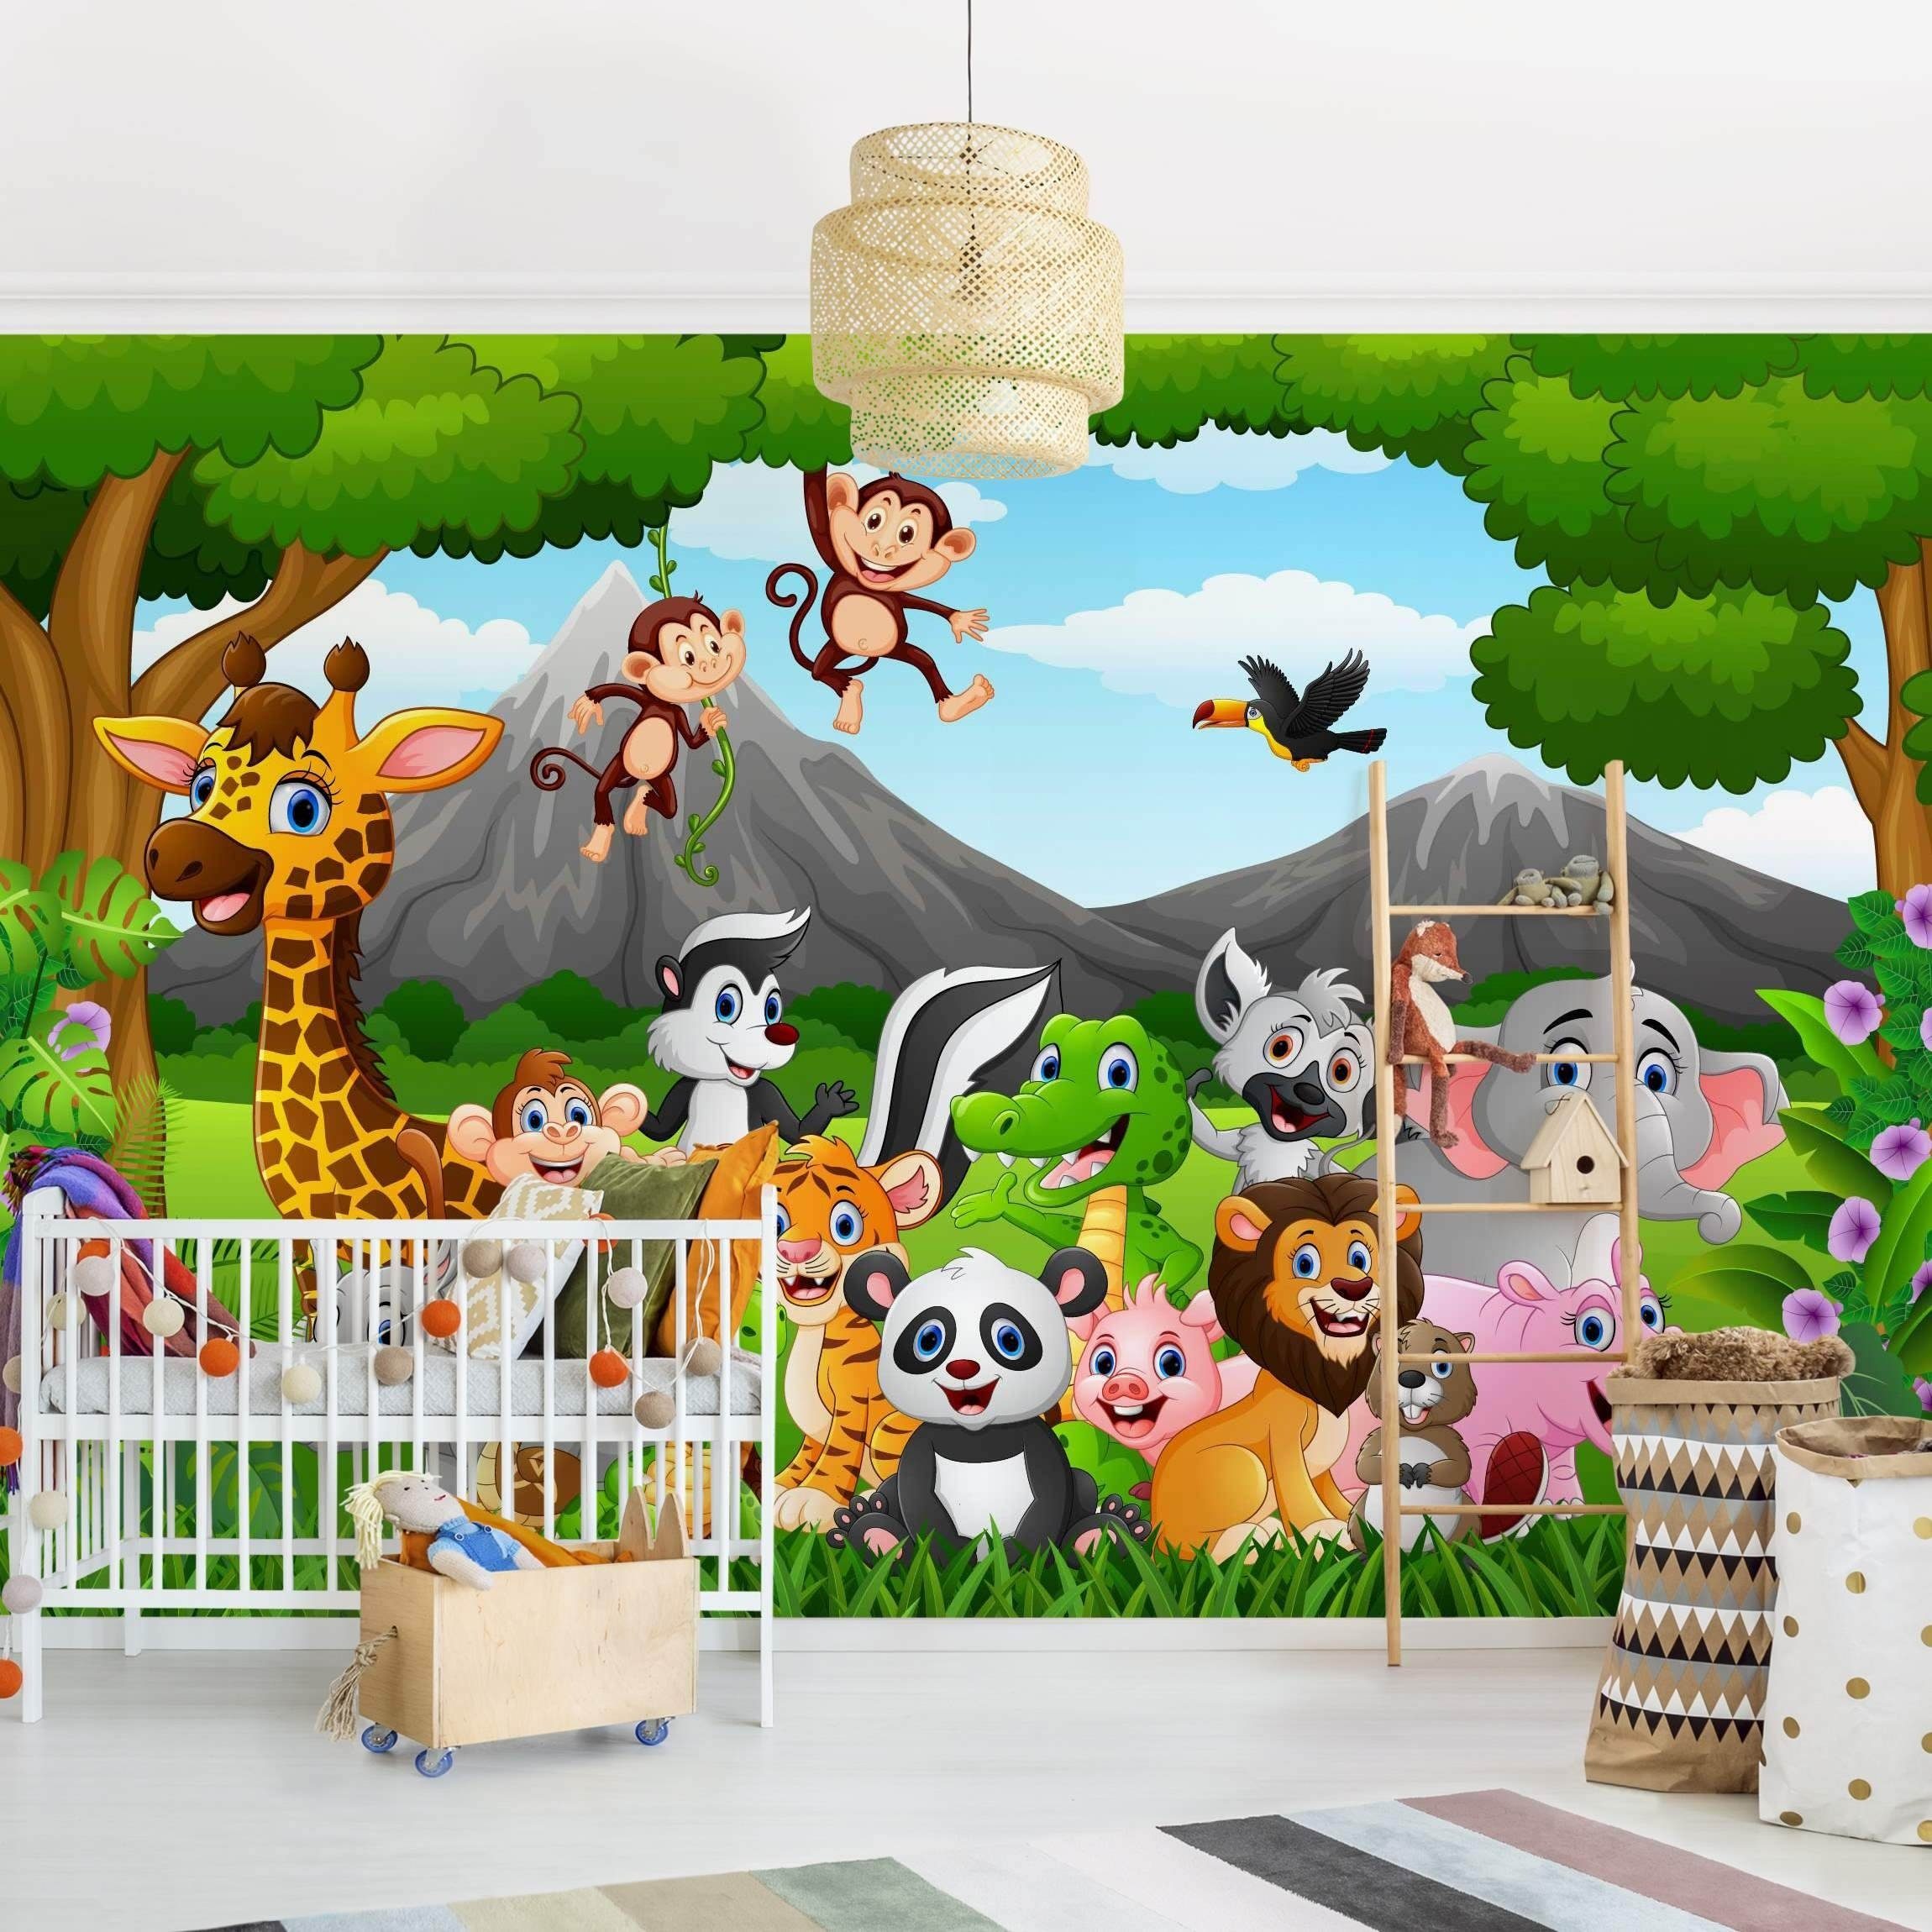 Bilderdepot24 Kindertapete Kinderzimmer Wilde Dschungeltiere Wanddeko Panda Giraffe Affen Elefant, Glatt, Matt, (Inklusive Gratis-Kleister oder selbstklebend), Mädchenzimmer Jungenzimmer Babyzimmer Bildtapete Fototapete Wandtapete